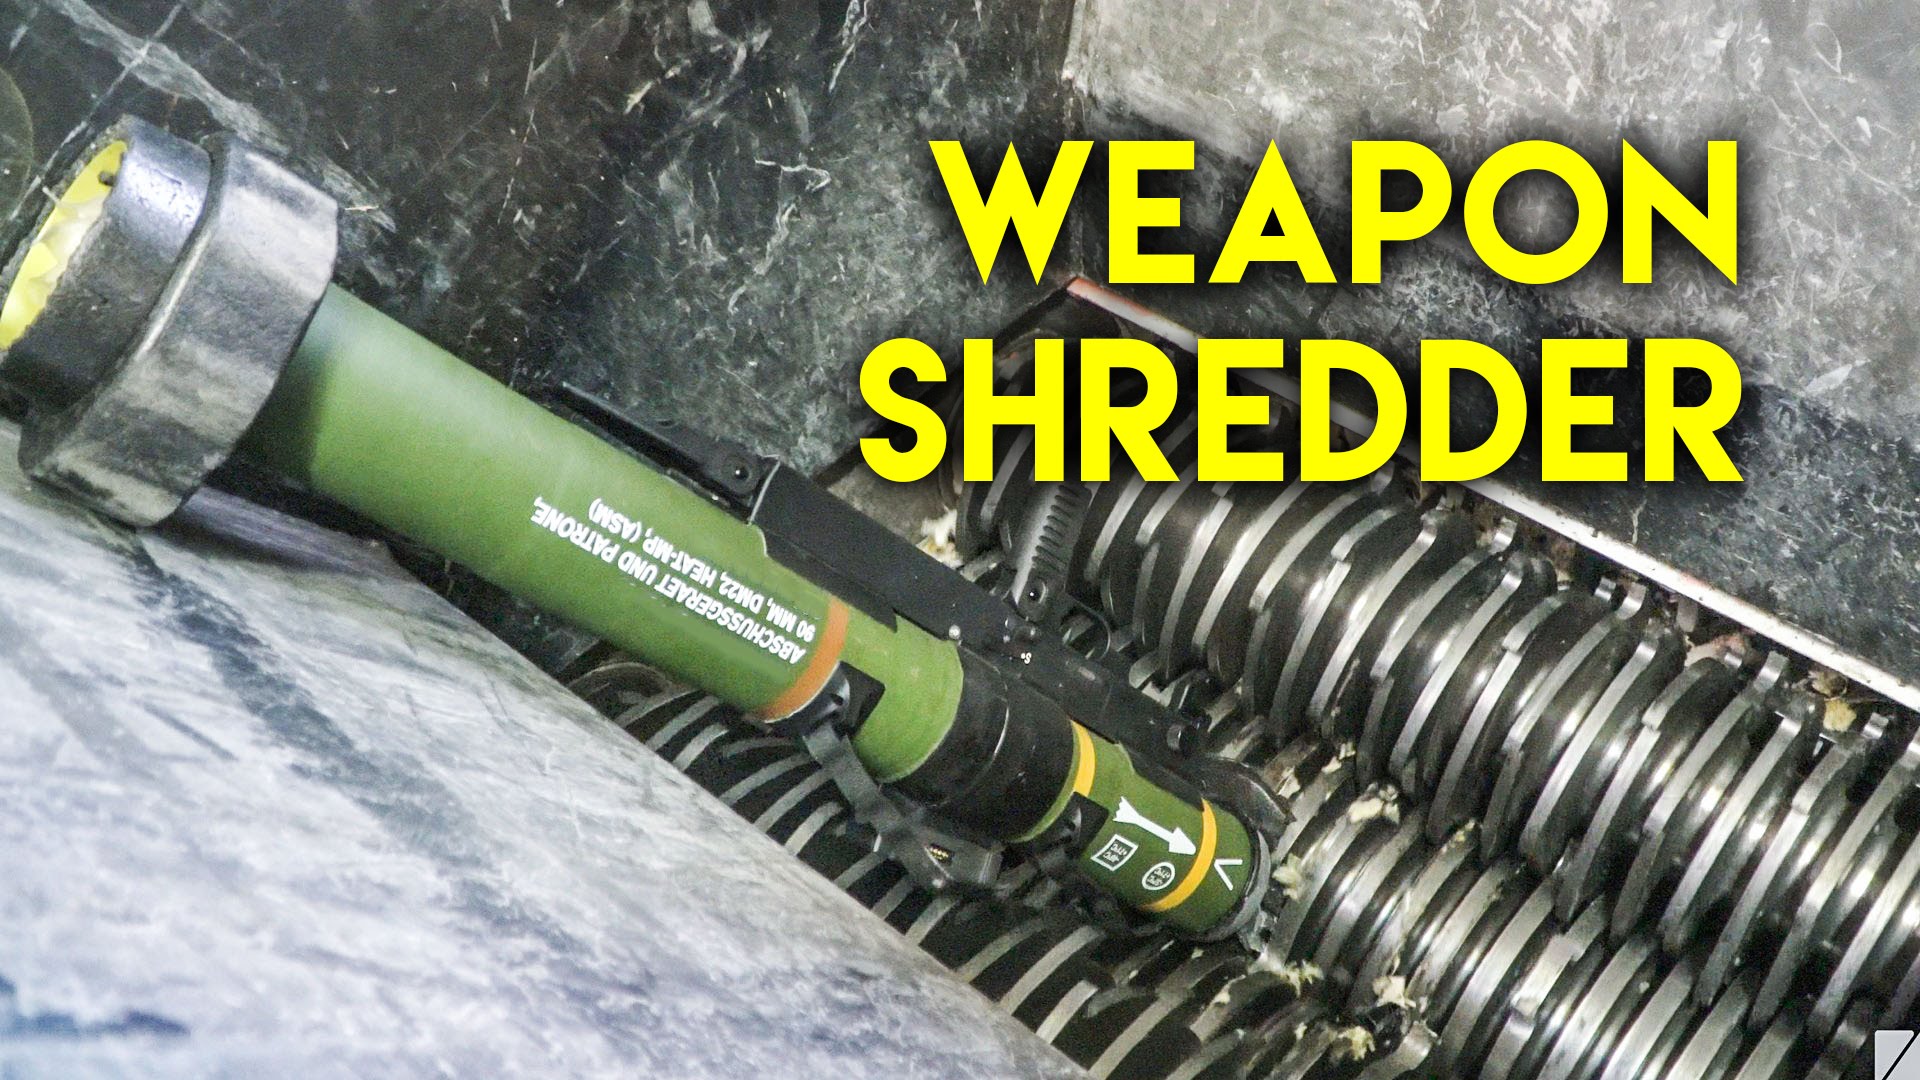 Shredding weapons (grenades, rocket launchers)